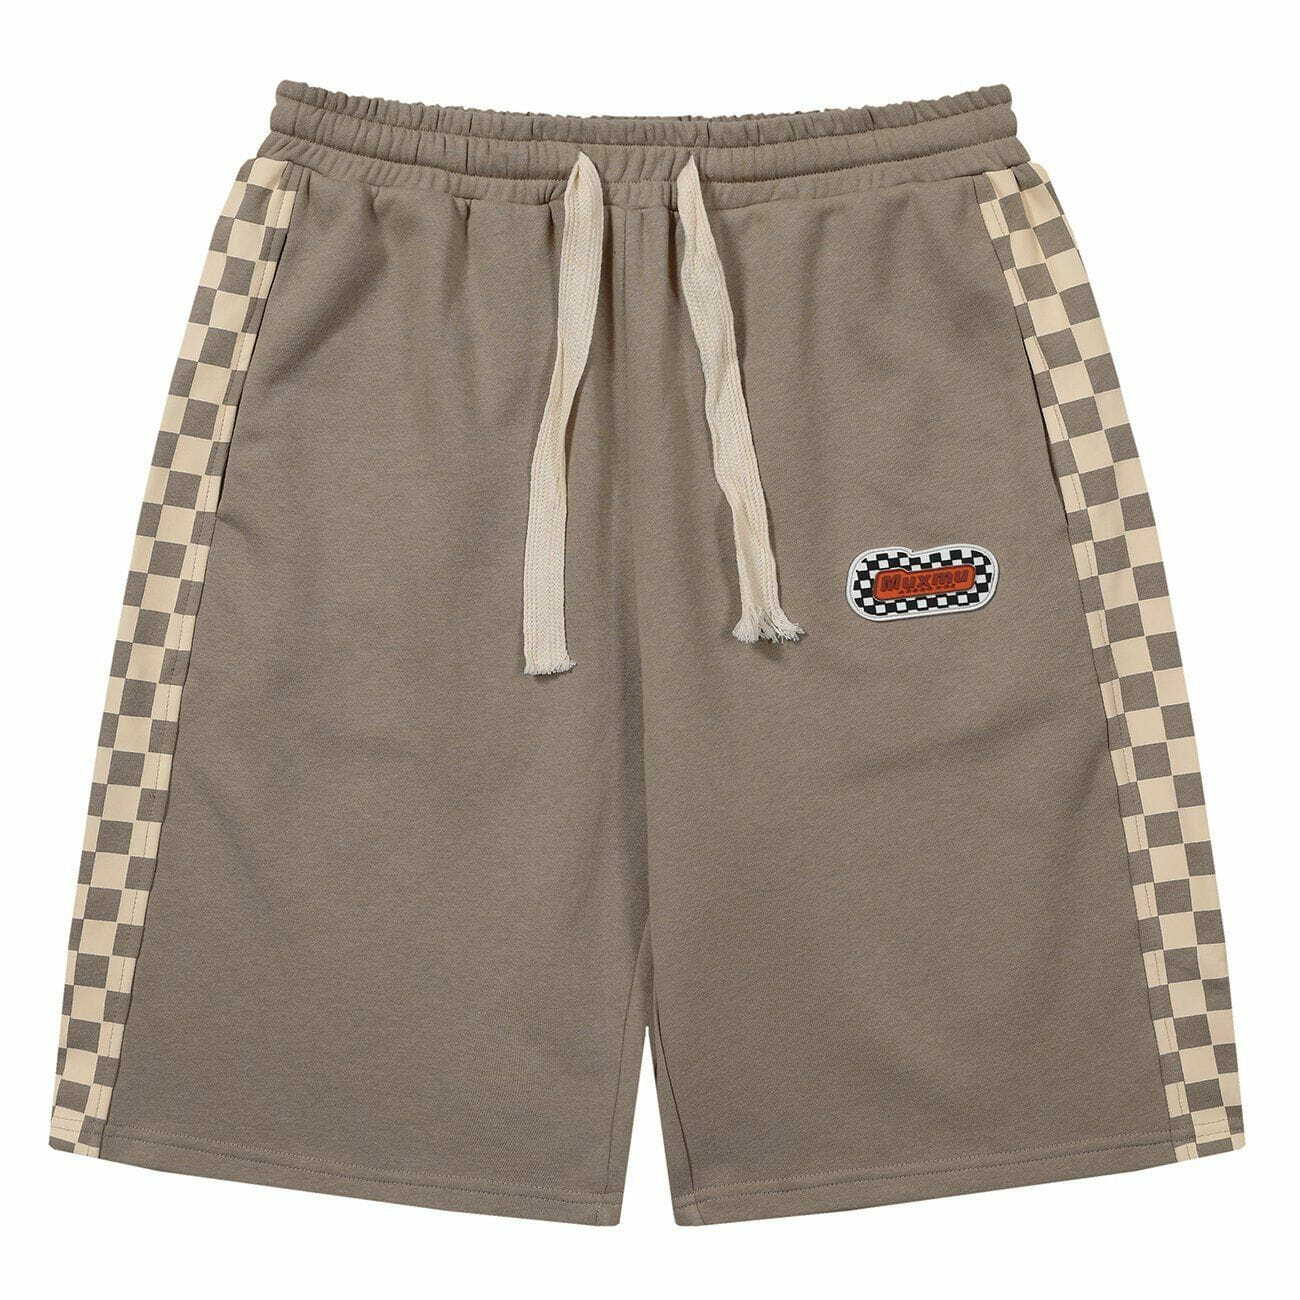 lattice print side shorts urban chic streetwear 5044